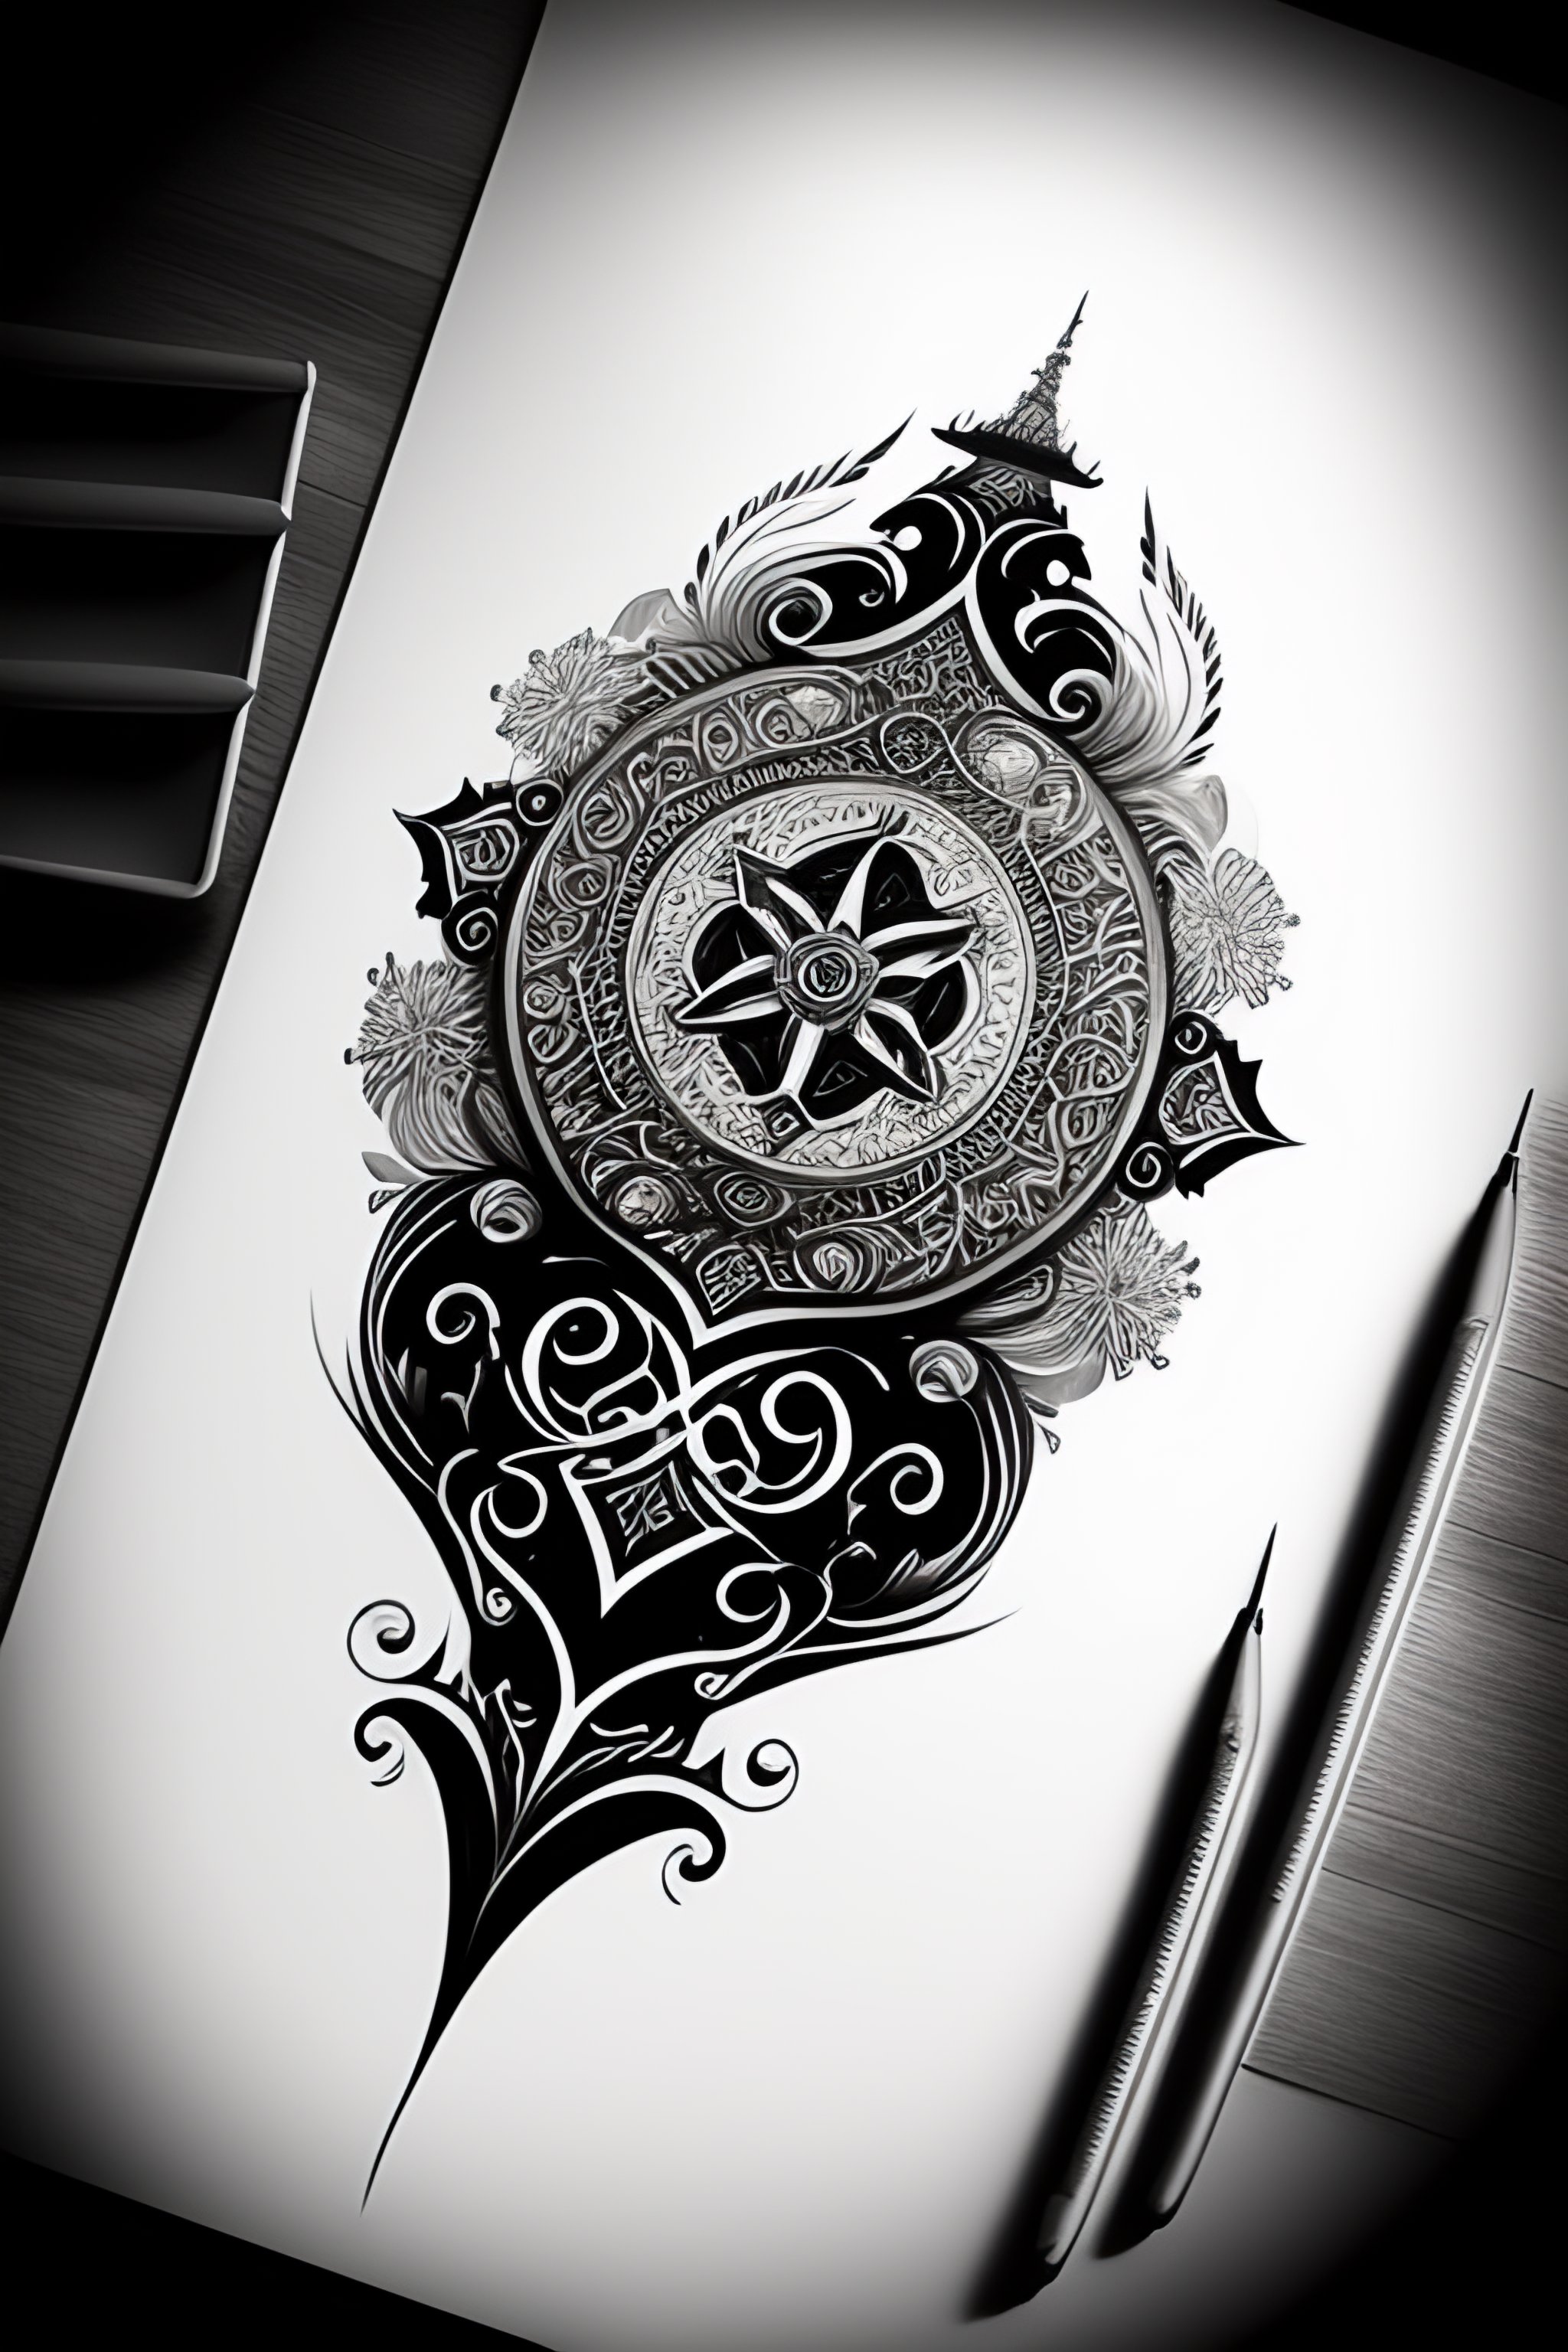 Lexica - Sketch creative tattoo design on white paper